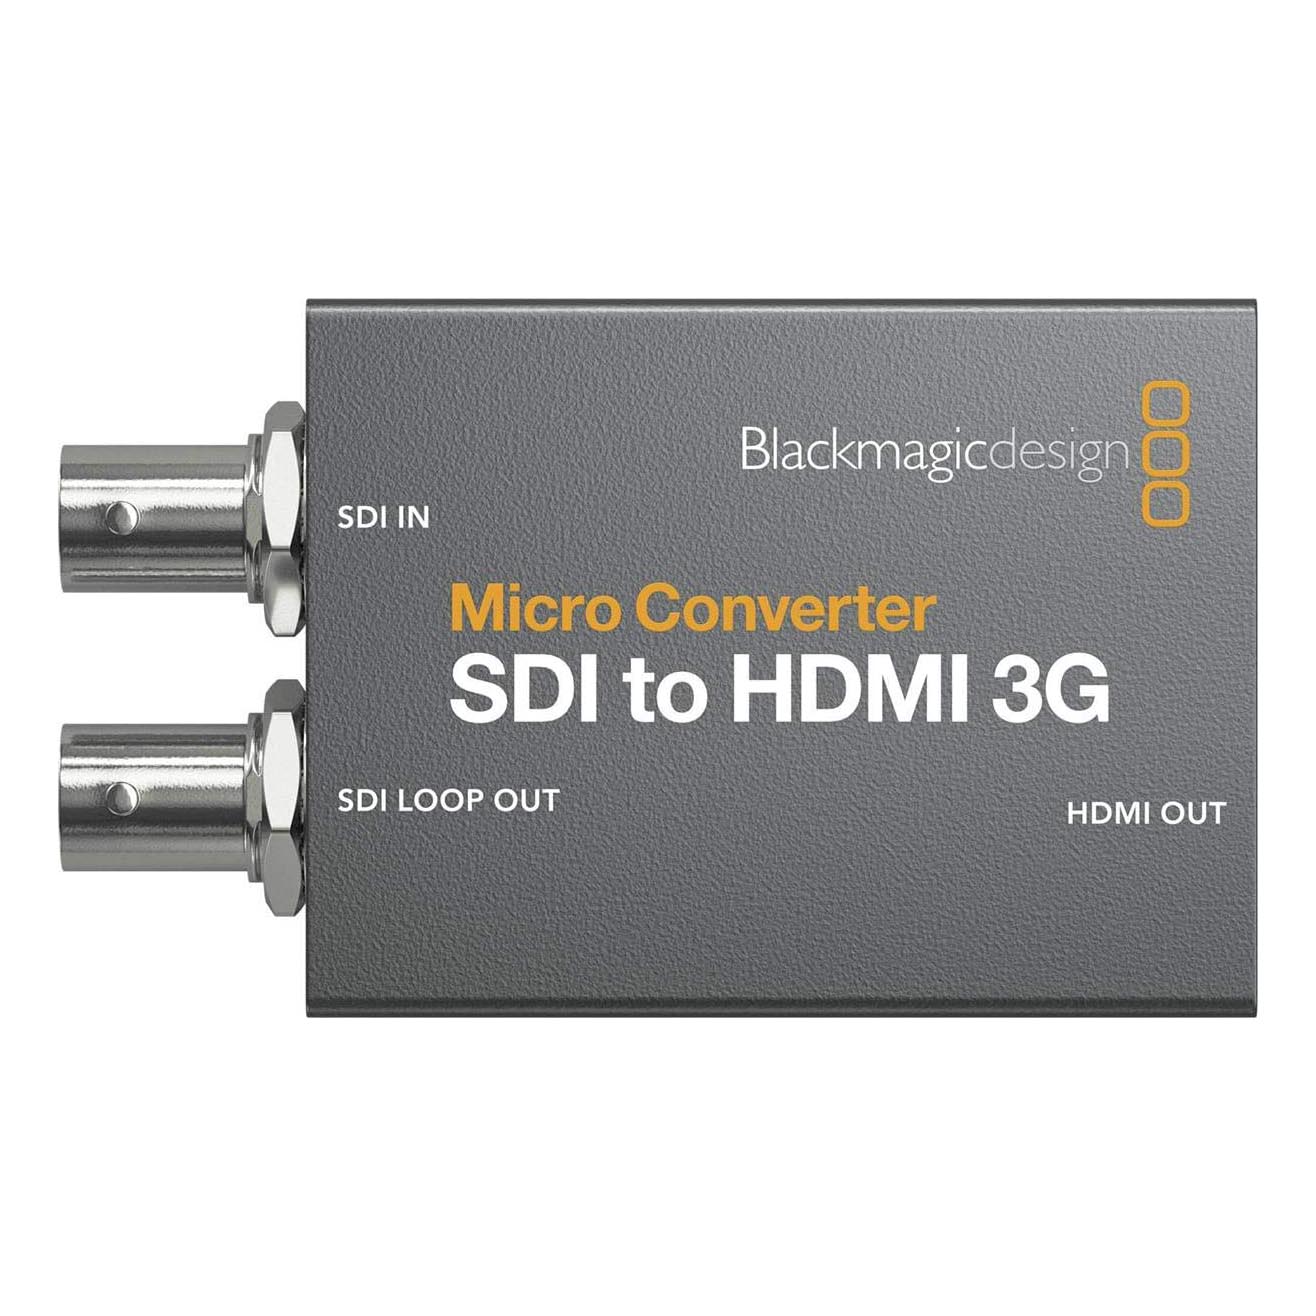 Конвертер Blackmagic Design Micro Converter SDI to HDMI 3G PSU конвертер blackmagic micro converter bidirectional sdi hdmi 3g psu